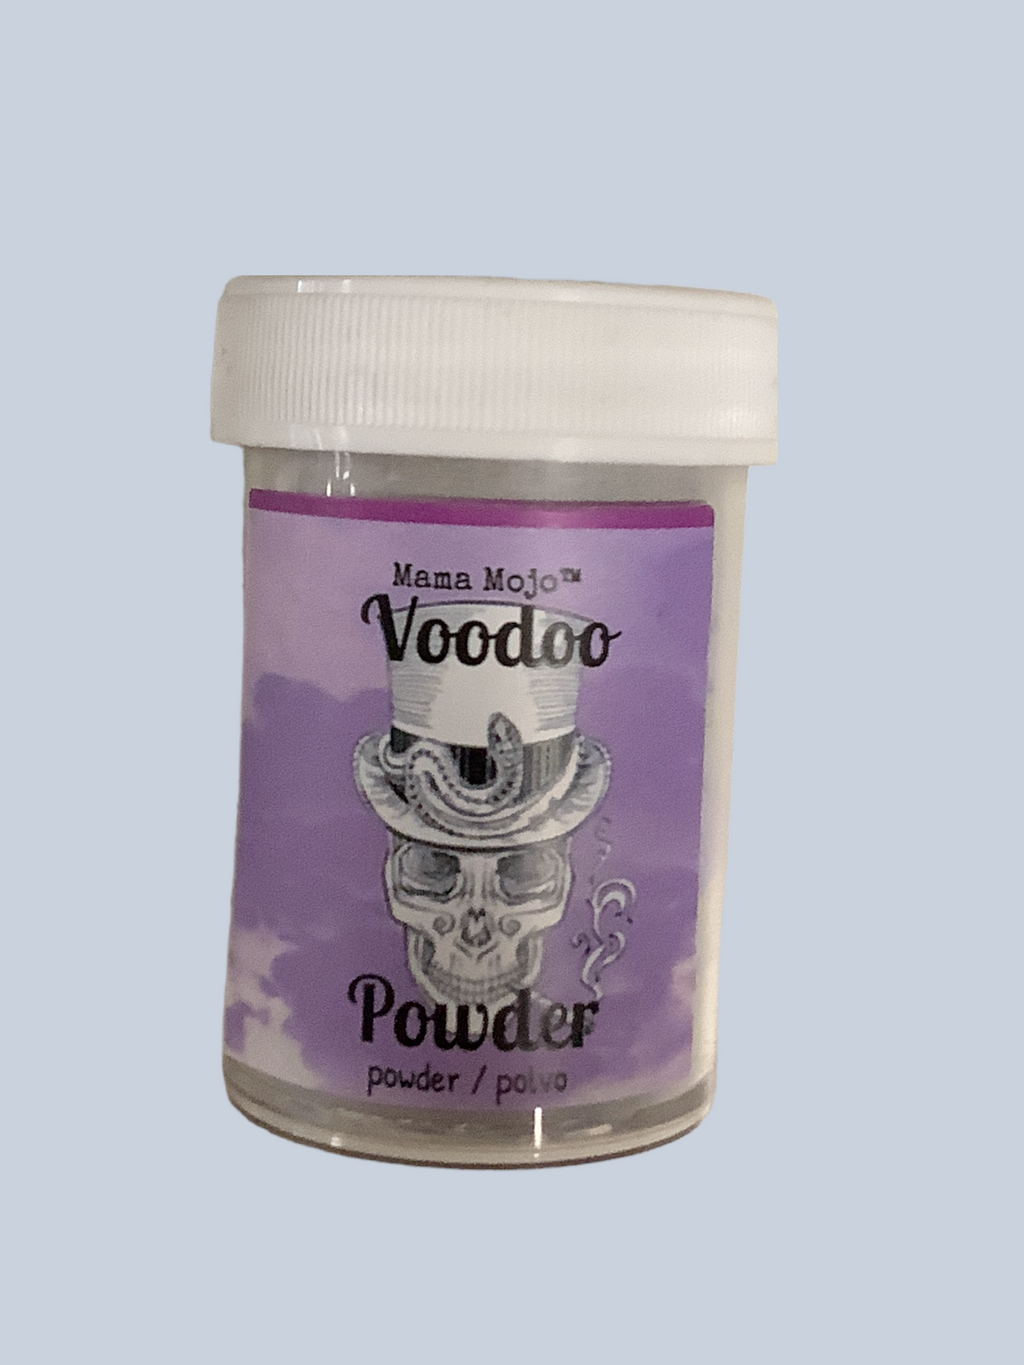 Voodoohydro - VooDoo's Cuckoo for Coco Pricing! [Mother